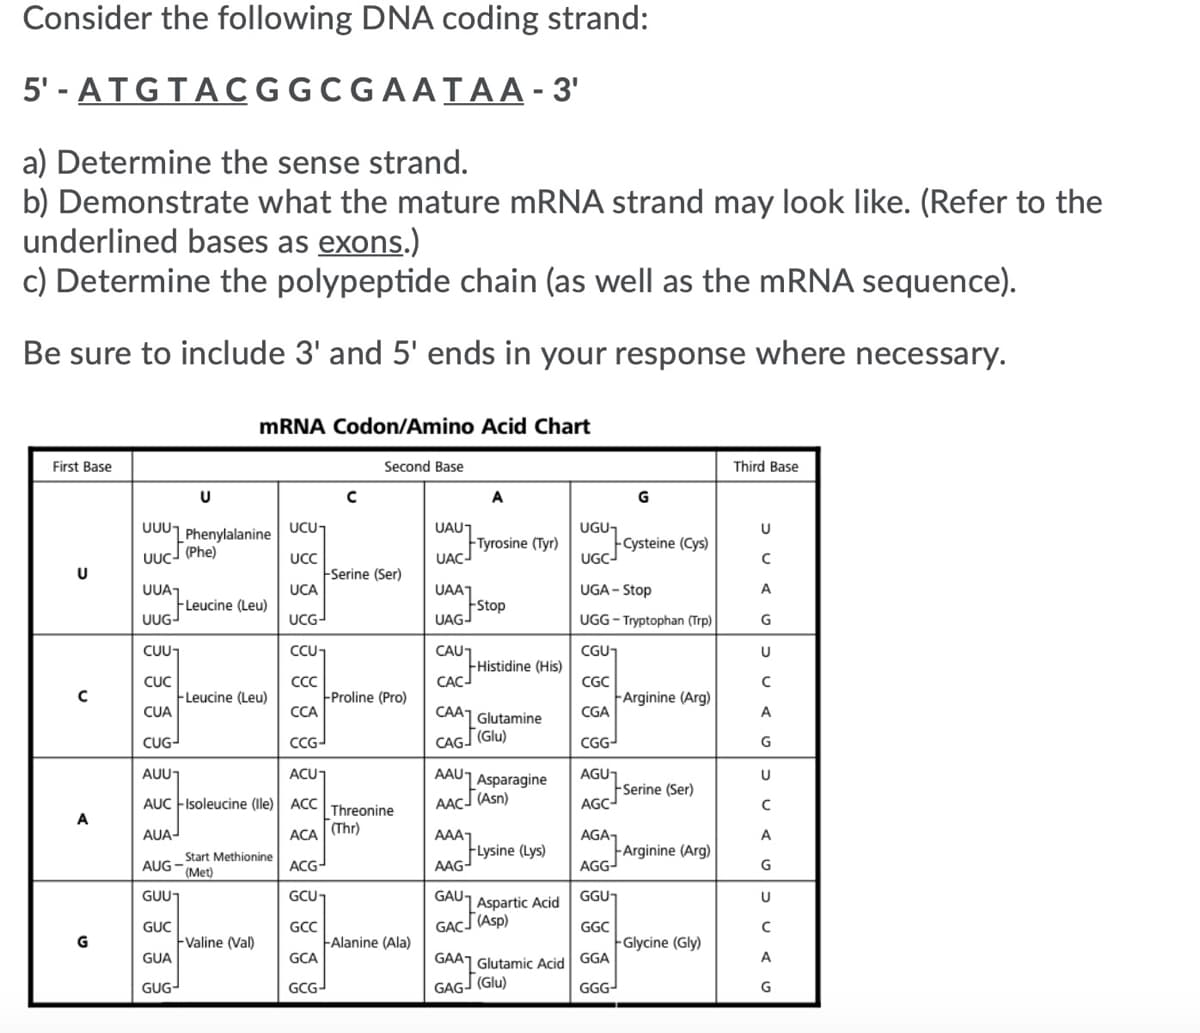 Consider the following DNA coding strand:
5' - ATGTACGGCGAATAA-3'
a) Determine the sense strand.
b) Demonstrate what the mature MRNA strand may look like. (Refer to the
underlined bases as exons.)
c) Determine the polypeptide chain (as well as the MRNA sequence).
Be sure to include 3' and 5' ends in your response where necessary.
MRNA Codon/Amino Acid Chart
First Base
Second Base
Third Base
A
G
UCU¬
UAU1
FTyrosine (Tyr)
UACJ
UUU1
Phenylalanine
UGU,
FCysteine (Cys)
UGC-
UUC-
(Phe)
UC
Serine (Ser)
UCA
UGA - Stop
UUA1
FLeucine (Leu)
UUGJ
UAAT
A
UCG-
Stop
UAGJ
UGG - Tryptophan (Trp)
G
CAU1
Histidine (His)
CAC
CUUT
CCU1
CGUT
U
CUC
FLeucine (Leu)
CUA
CGC
Proline (Pro)
CCA
FArginine (Arg)
CGA
CAA1 Glutamine
A
CAG (Glu)
CGG-
CUG-
CCGJ
G
AGUT
FSerine (Ser)
AGC-
AUUT
ACU1
AAUT
U
| Asparagine
AACJ (Asn)
AUC FIsoleucine (lle) ACC
Threonine
(Thr)
A
AUA-
ACA
AAA1
AGA7
A
Start Methionine
(Met)
FLysine (Lys)
AAG-
FArginine (Arg)
AGG-
AUG
ACG-
G
GUUT
GCU
GAU,
GGUT
U
Aspartic Acid
GACJ (Asp)
GUC
GCC
GGC
G
Fvaline (Val)
FAlanine (Ala)
Glycine (Gly)
GUA
GCA
GAAJ Glutamic Acid GGA
A
GAGJ (Glu)
GGG-
GUG-
GCG-
G
